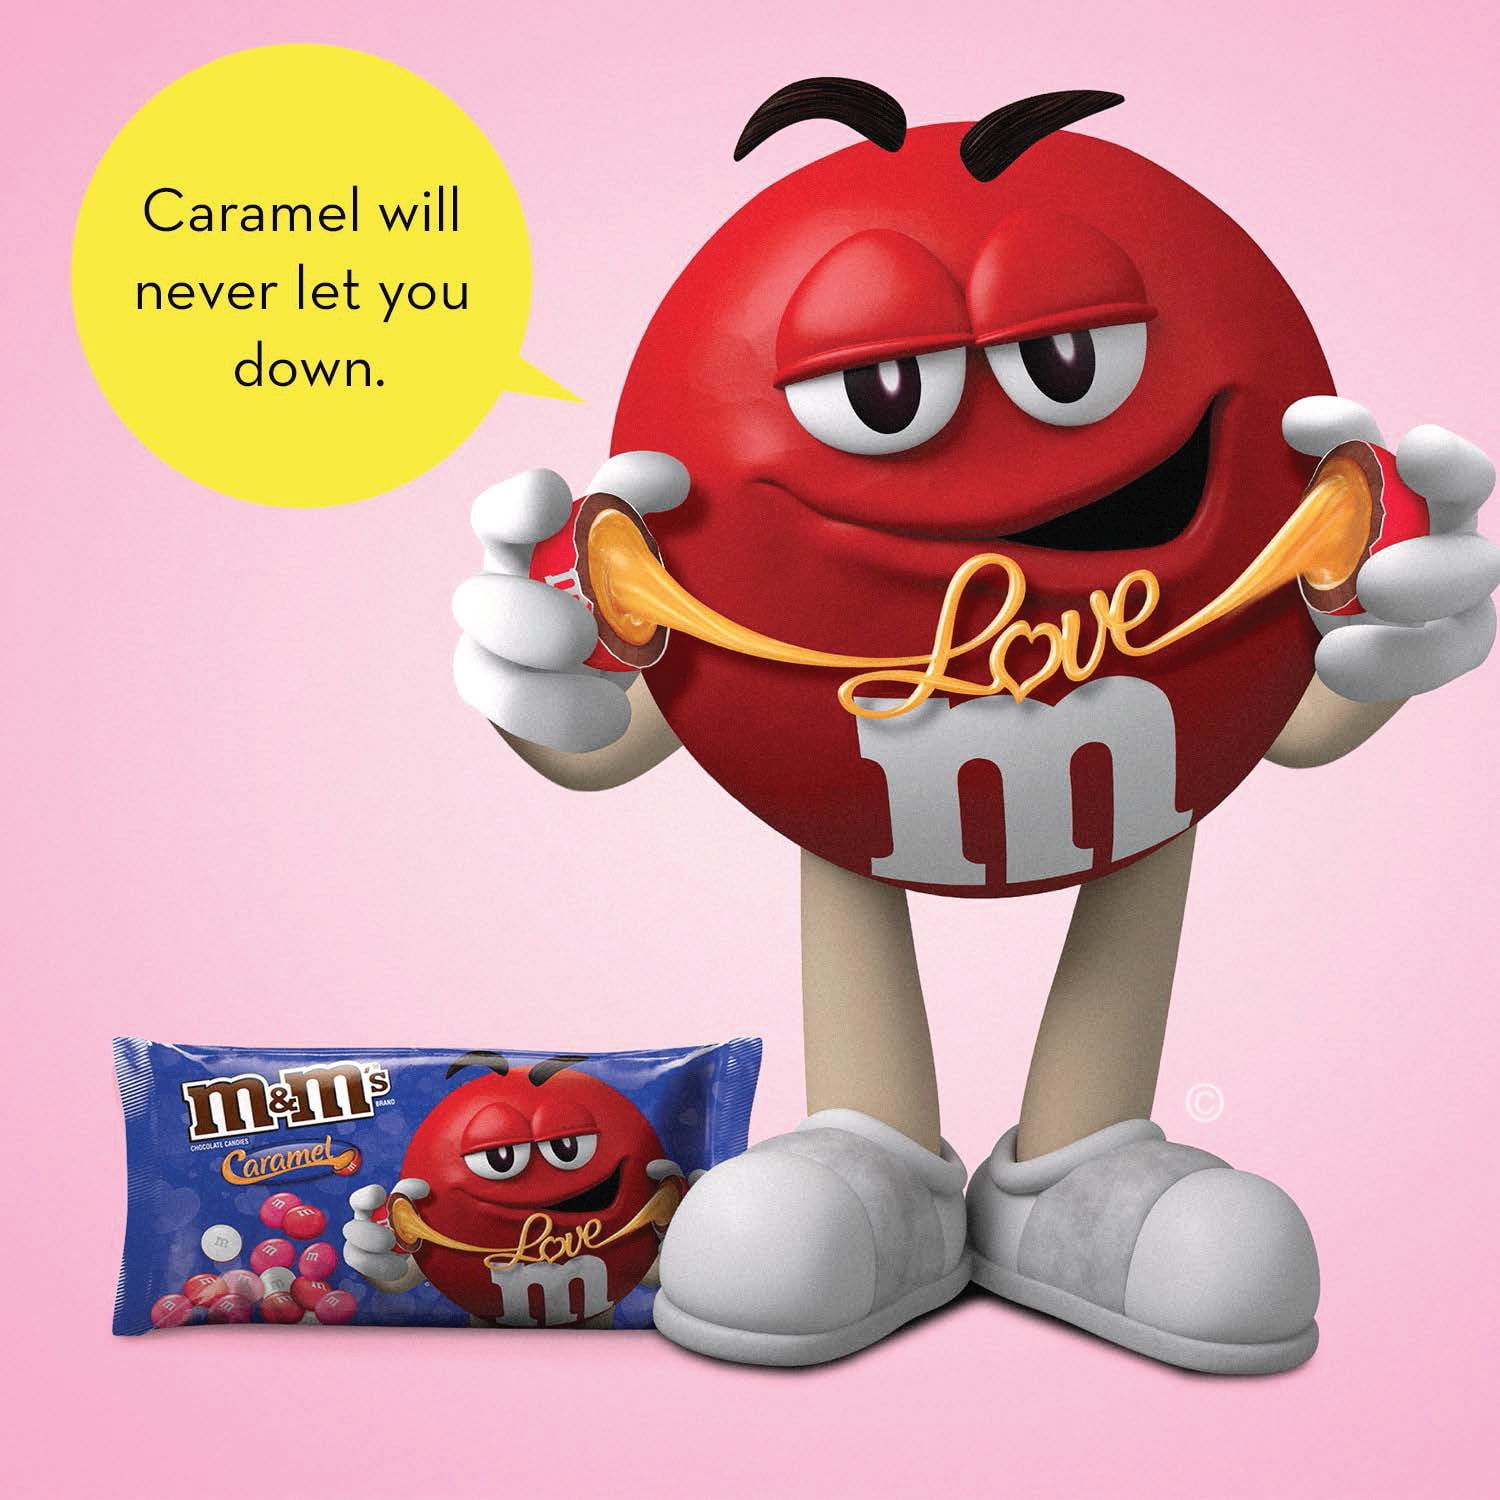 Mars M&M's Valentine's Day Caramel Chocolate Candy, 9.9 Oz.